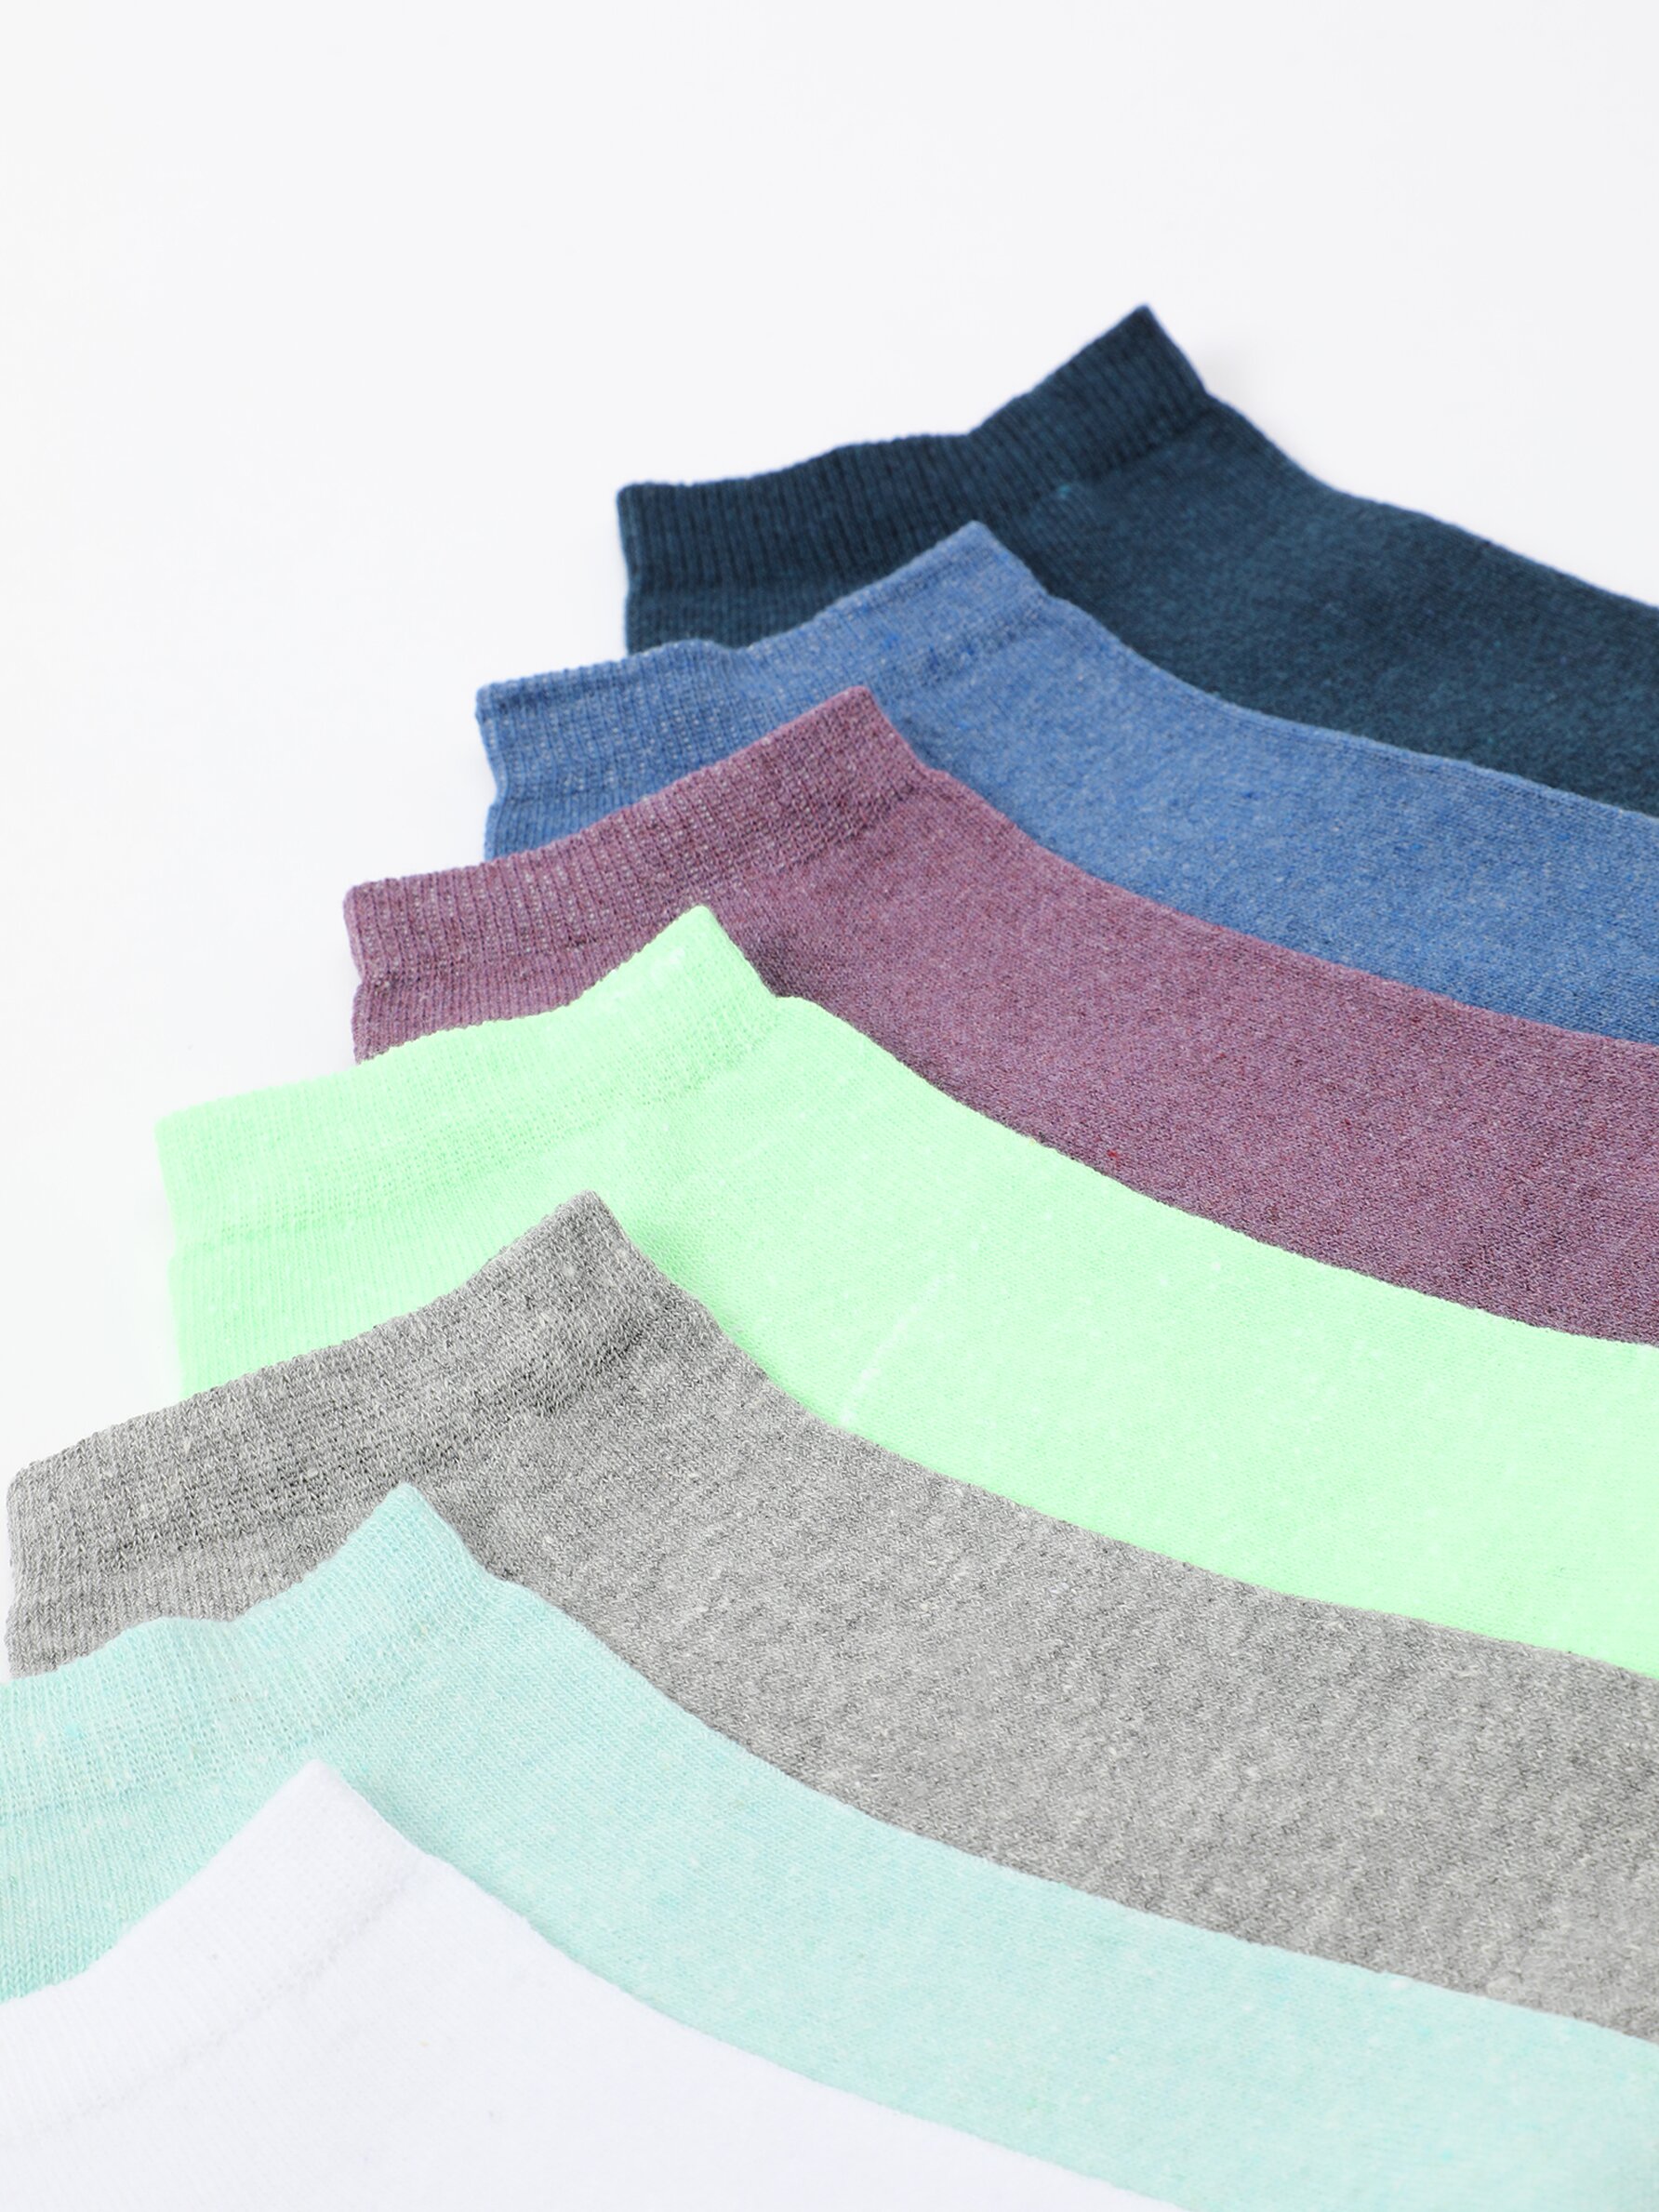 Pack 3 pares calcetines algodón 401 - Comprar online